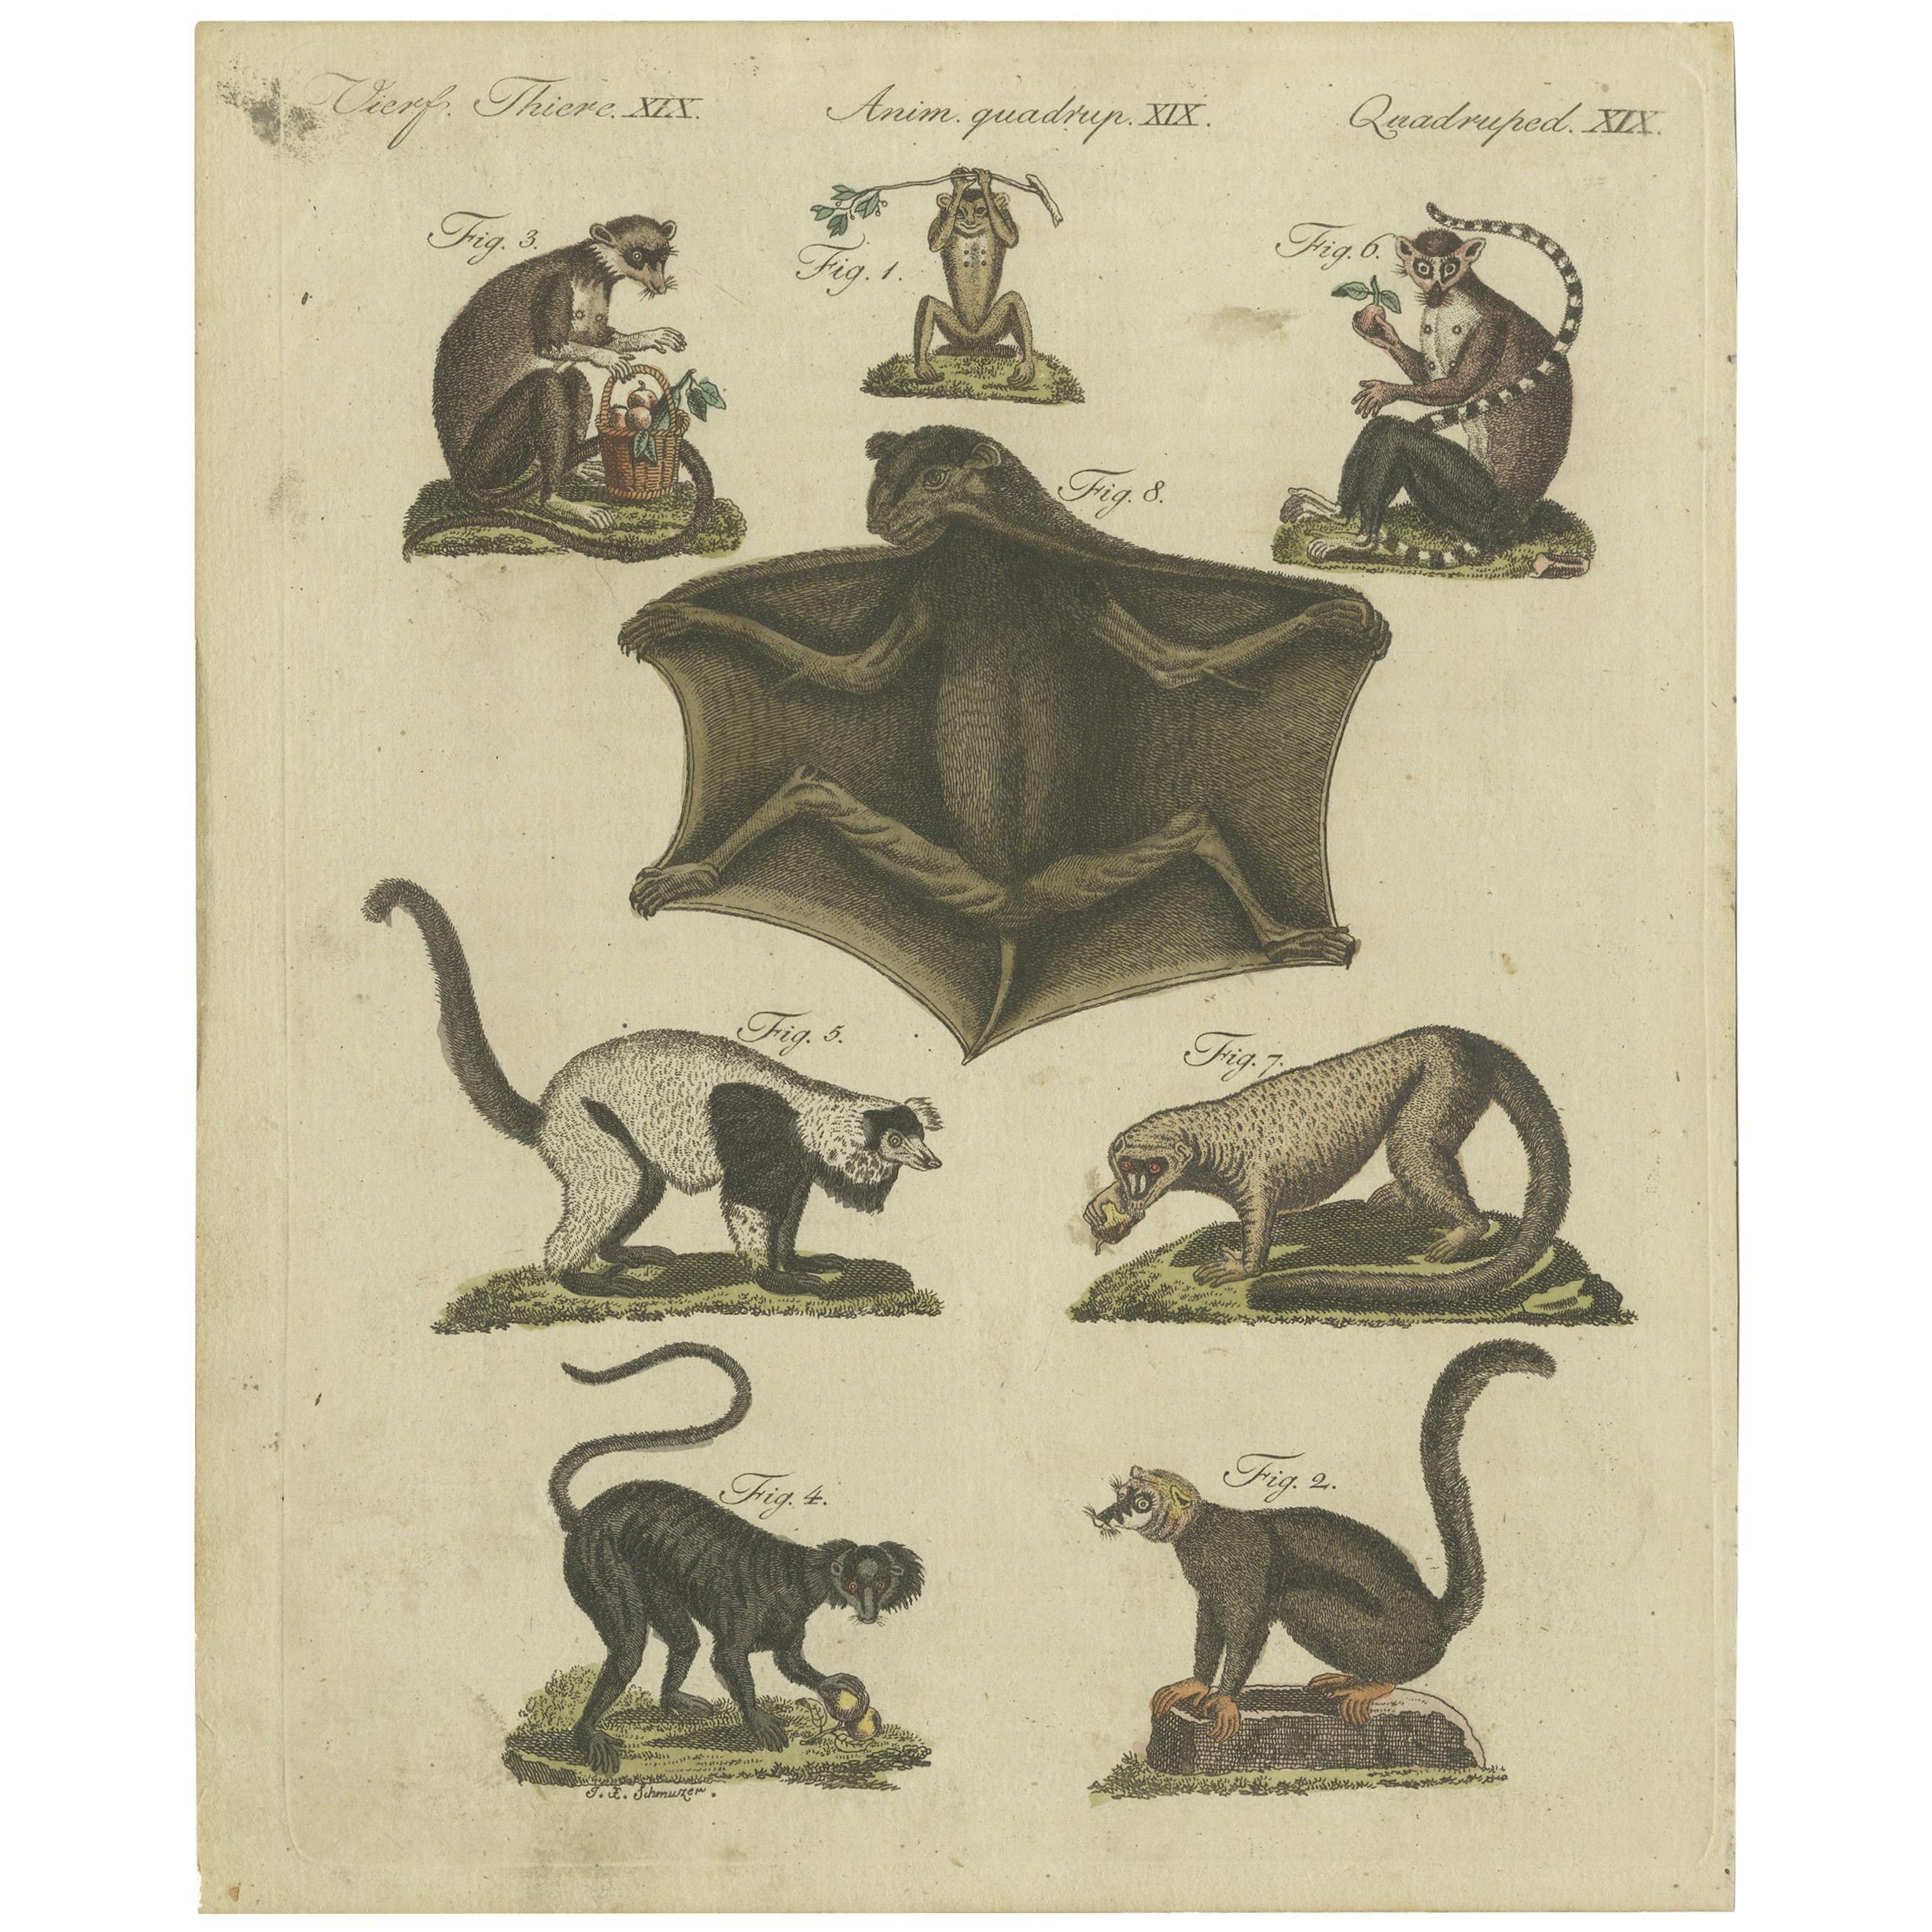 Antique Animal Print of Lemur Species by Bertuch, circa 1800